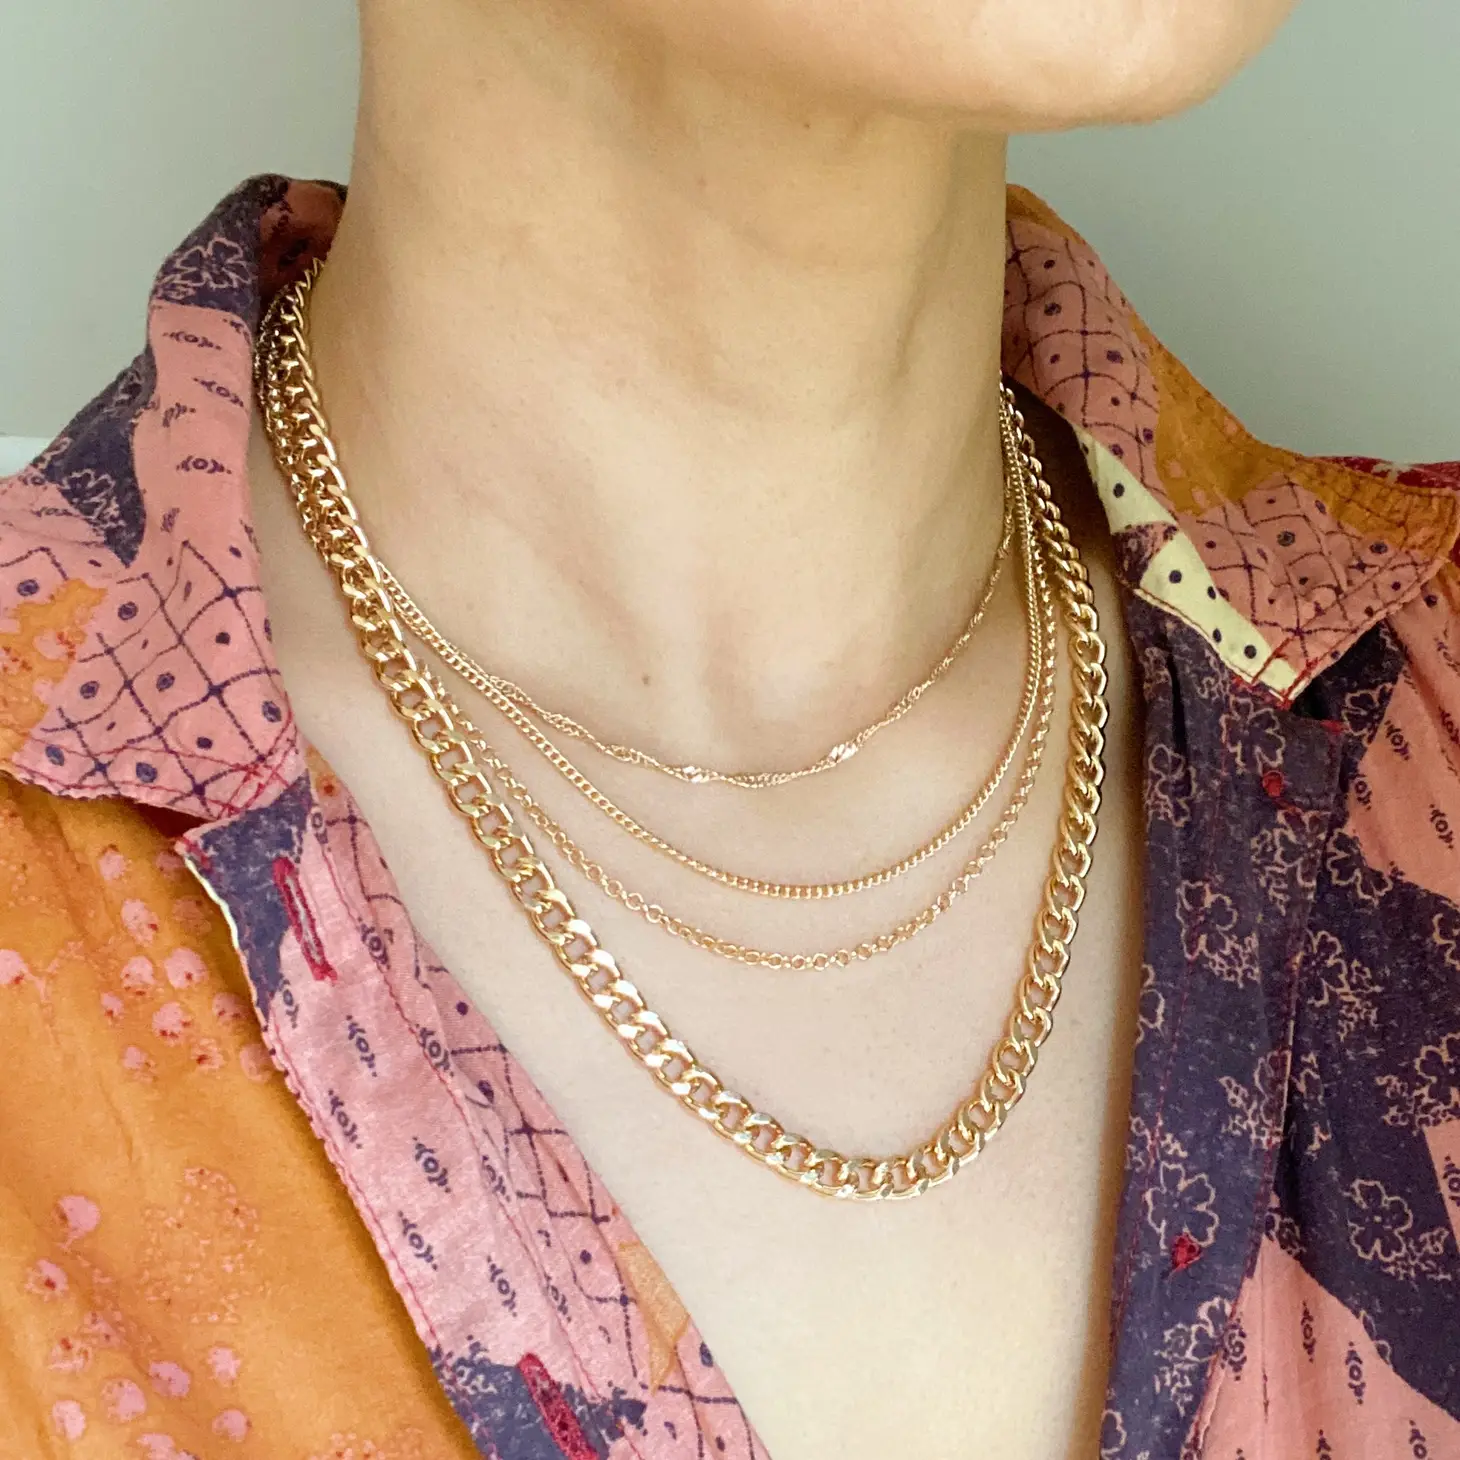 quattro layered necklace